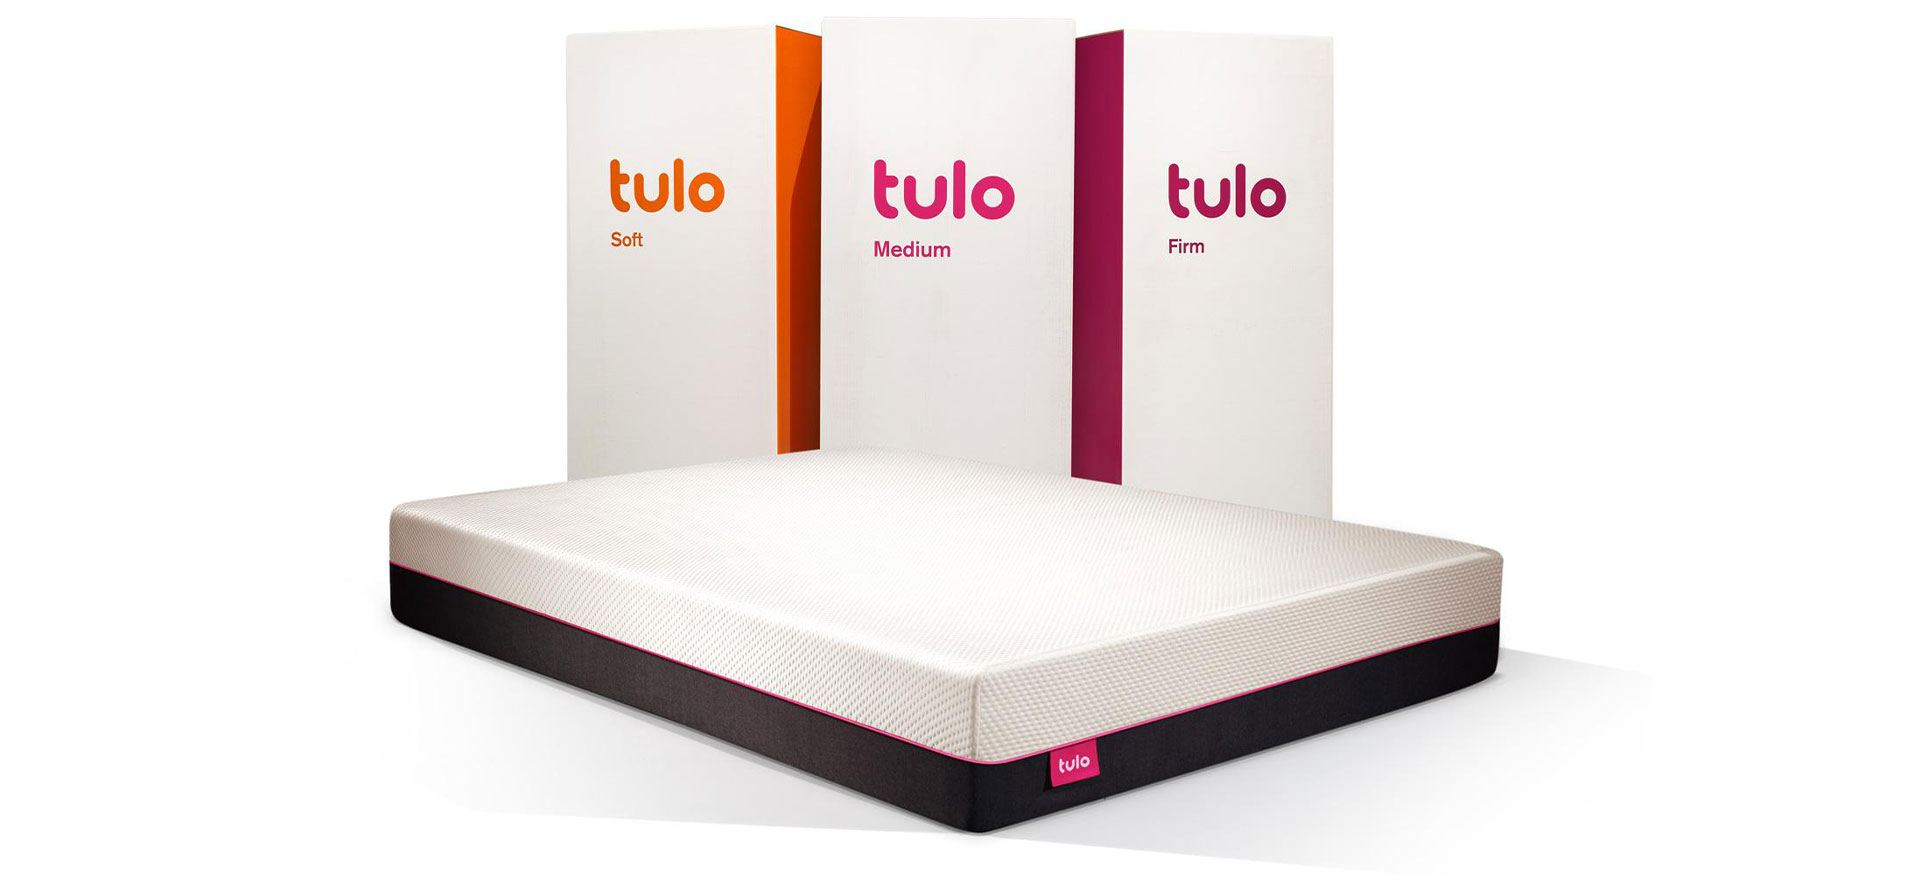 Tulo mattress sizes.